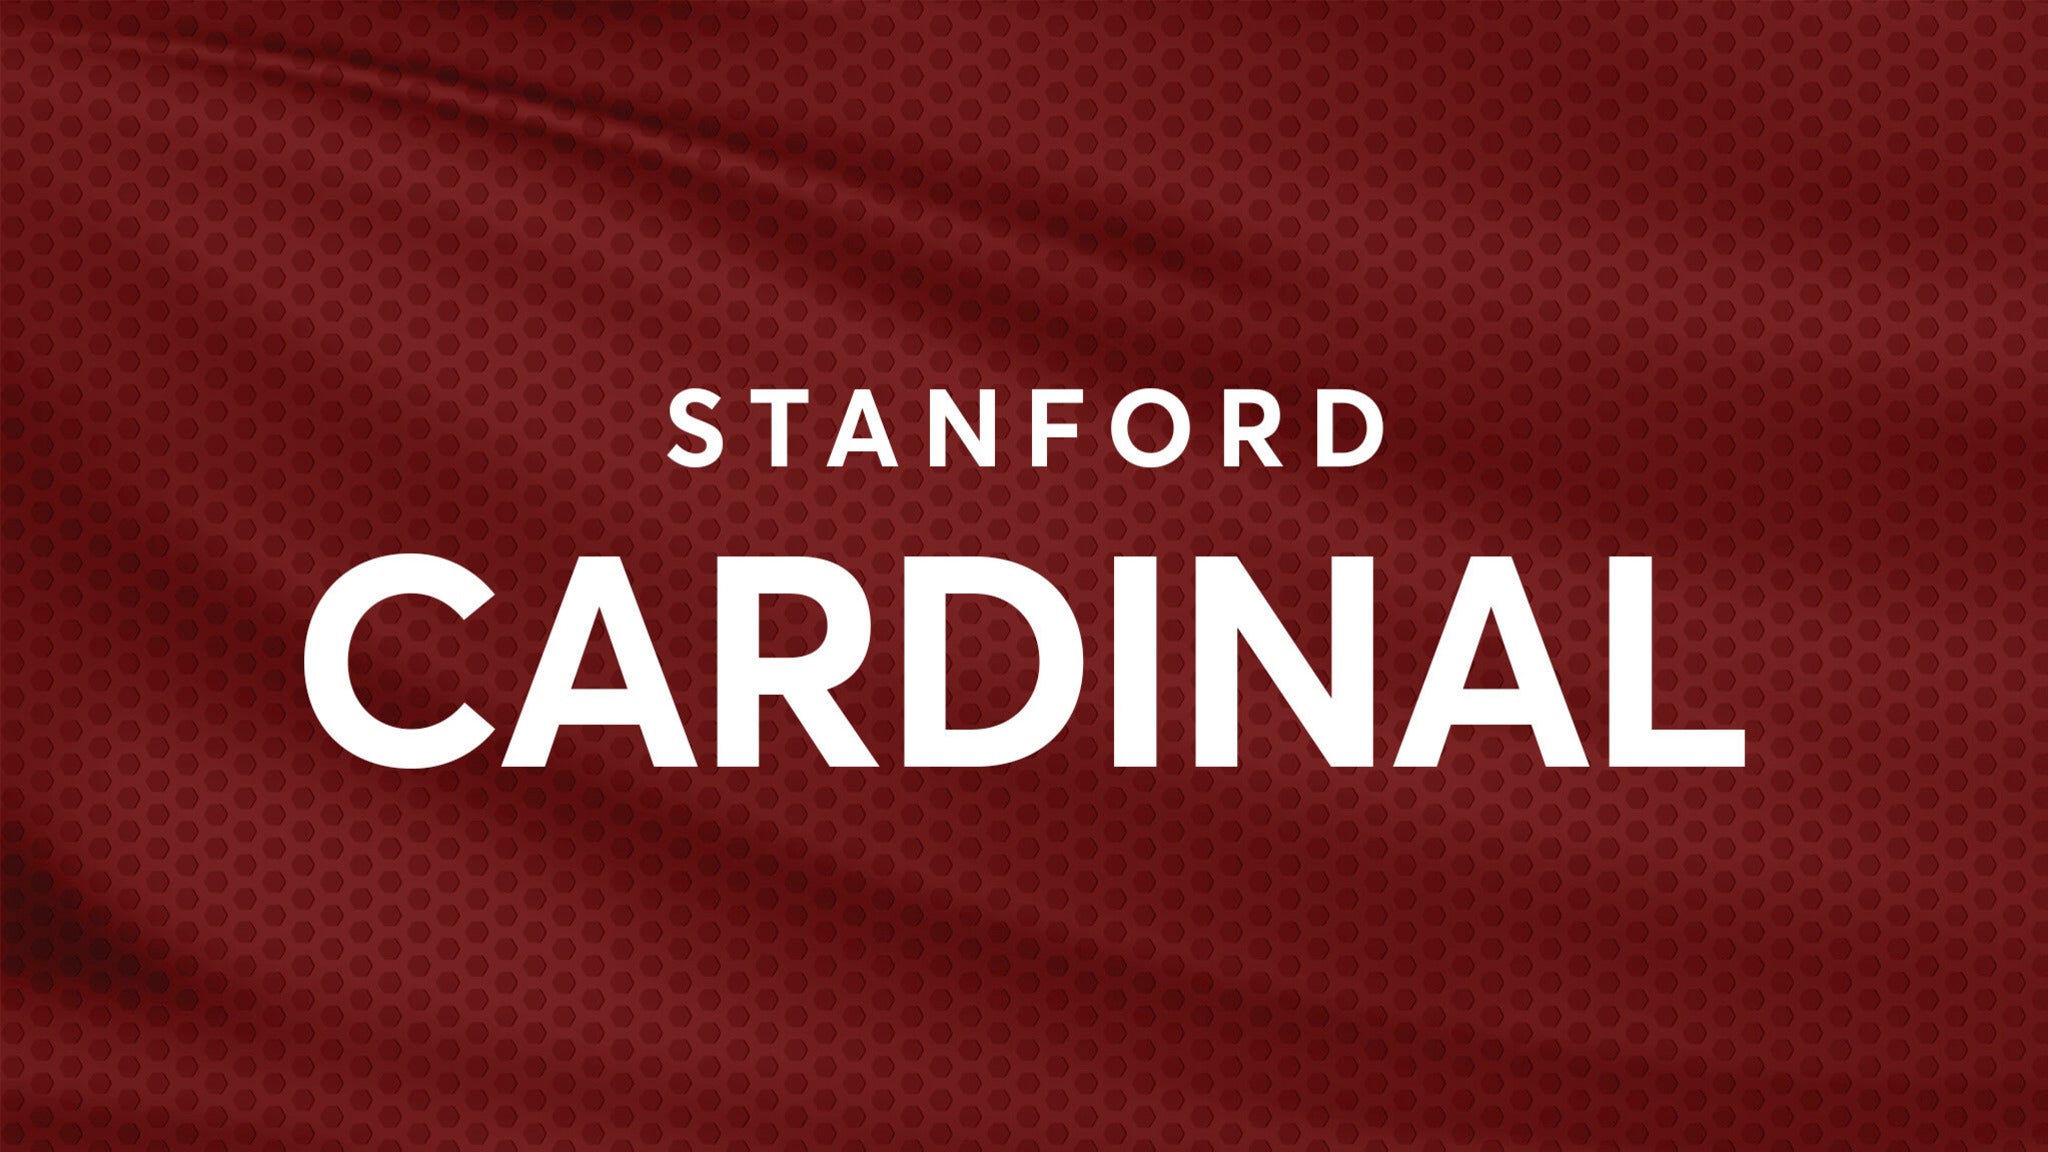 Stanford Cardinal Football vs. Oregon Ducks Football